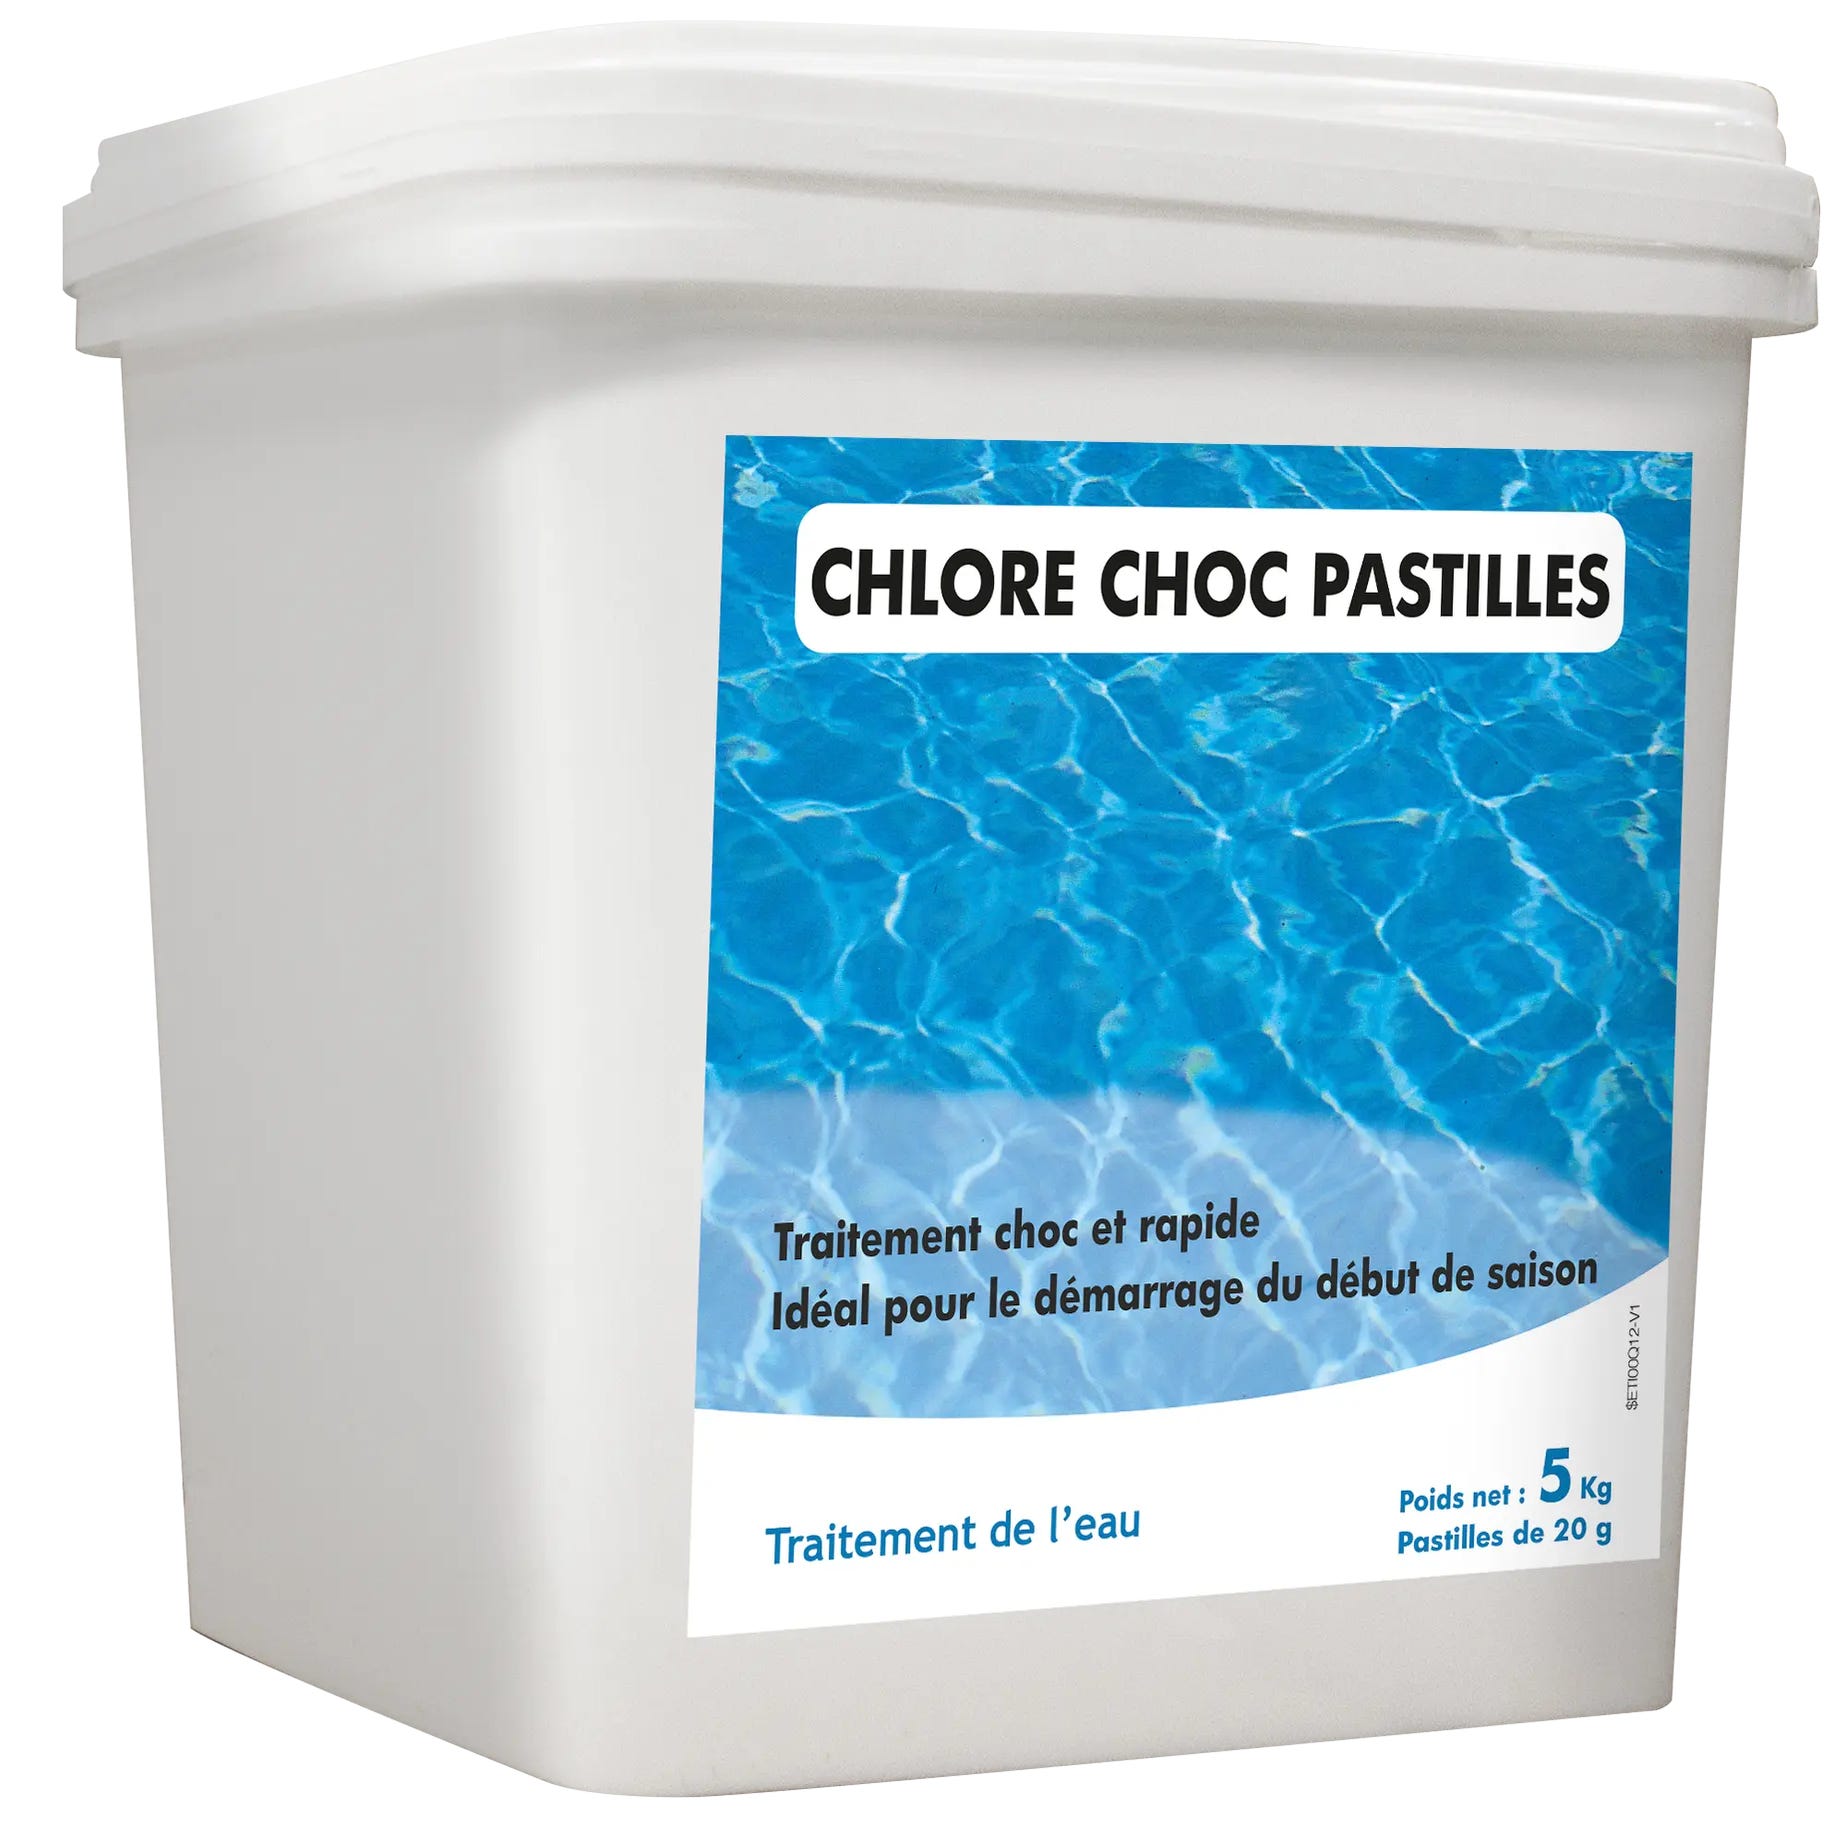 Chlore choc piscine, pastille 5 kg